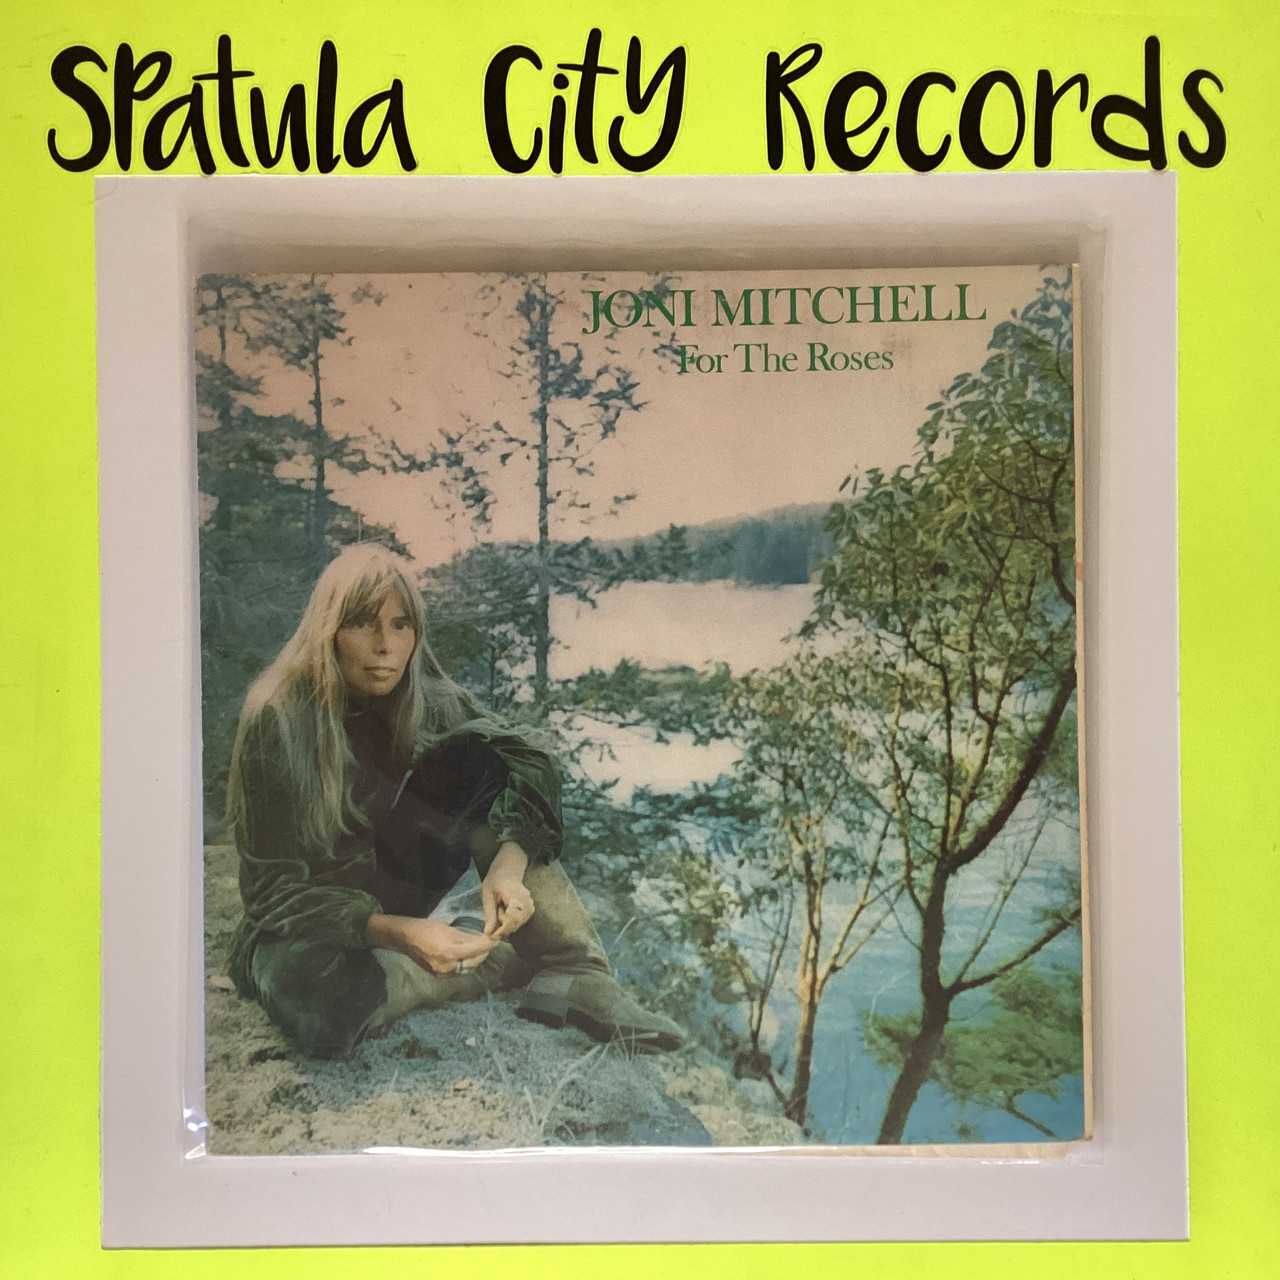 Joni Mitchell - for the roses - vinyl record album LP